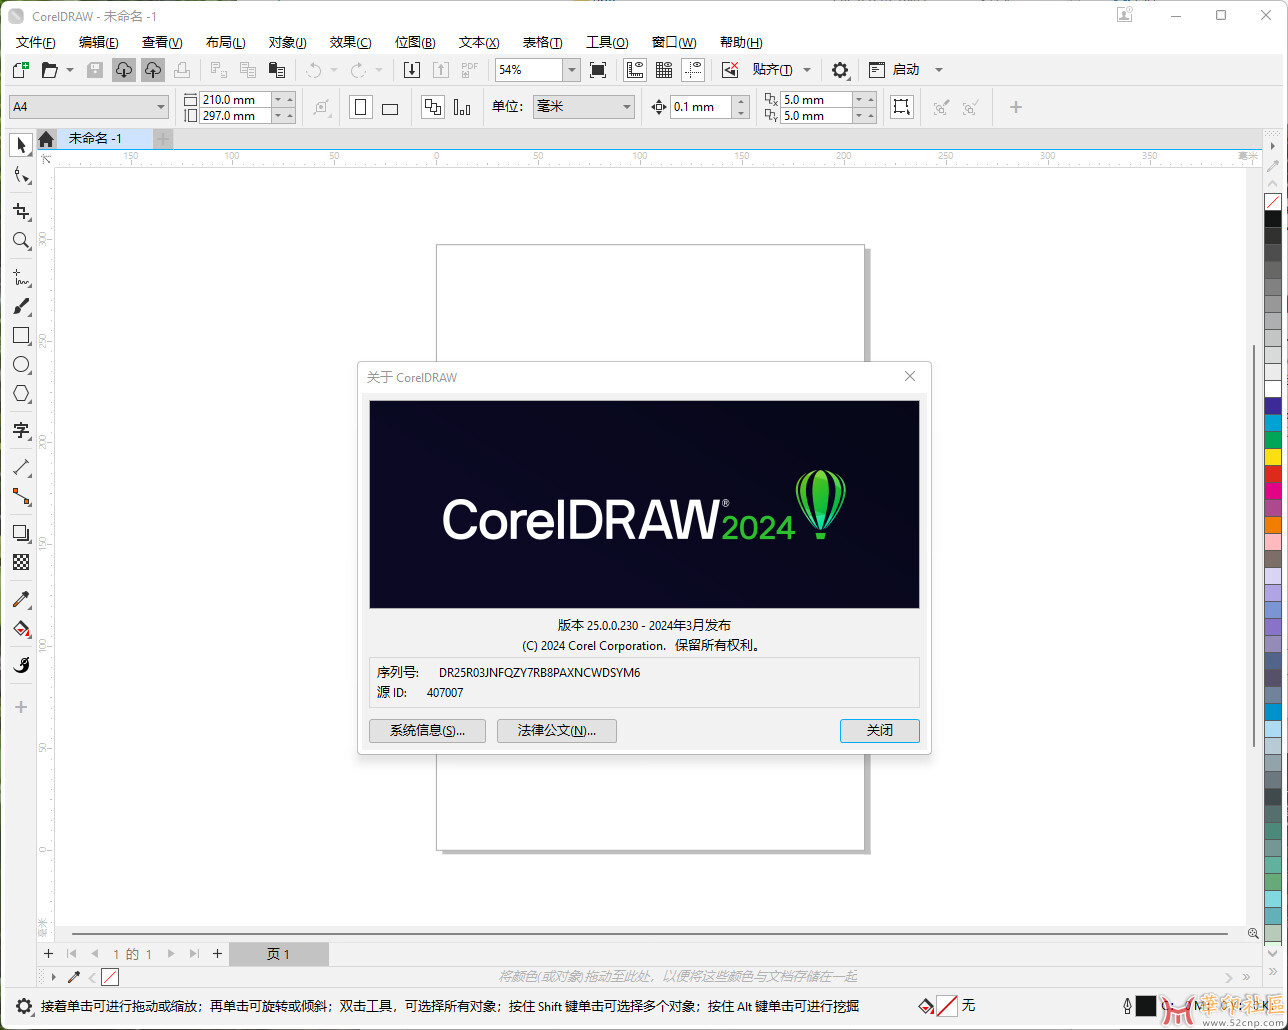 CorelDRAW 2024 25.0.0.230 多语便携版出错解决{tag}(1)